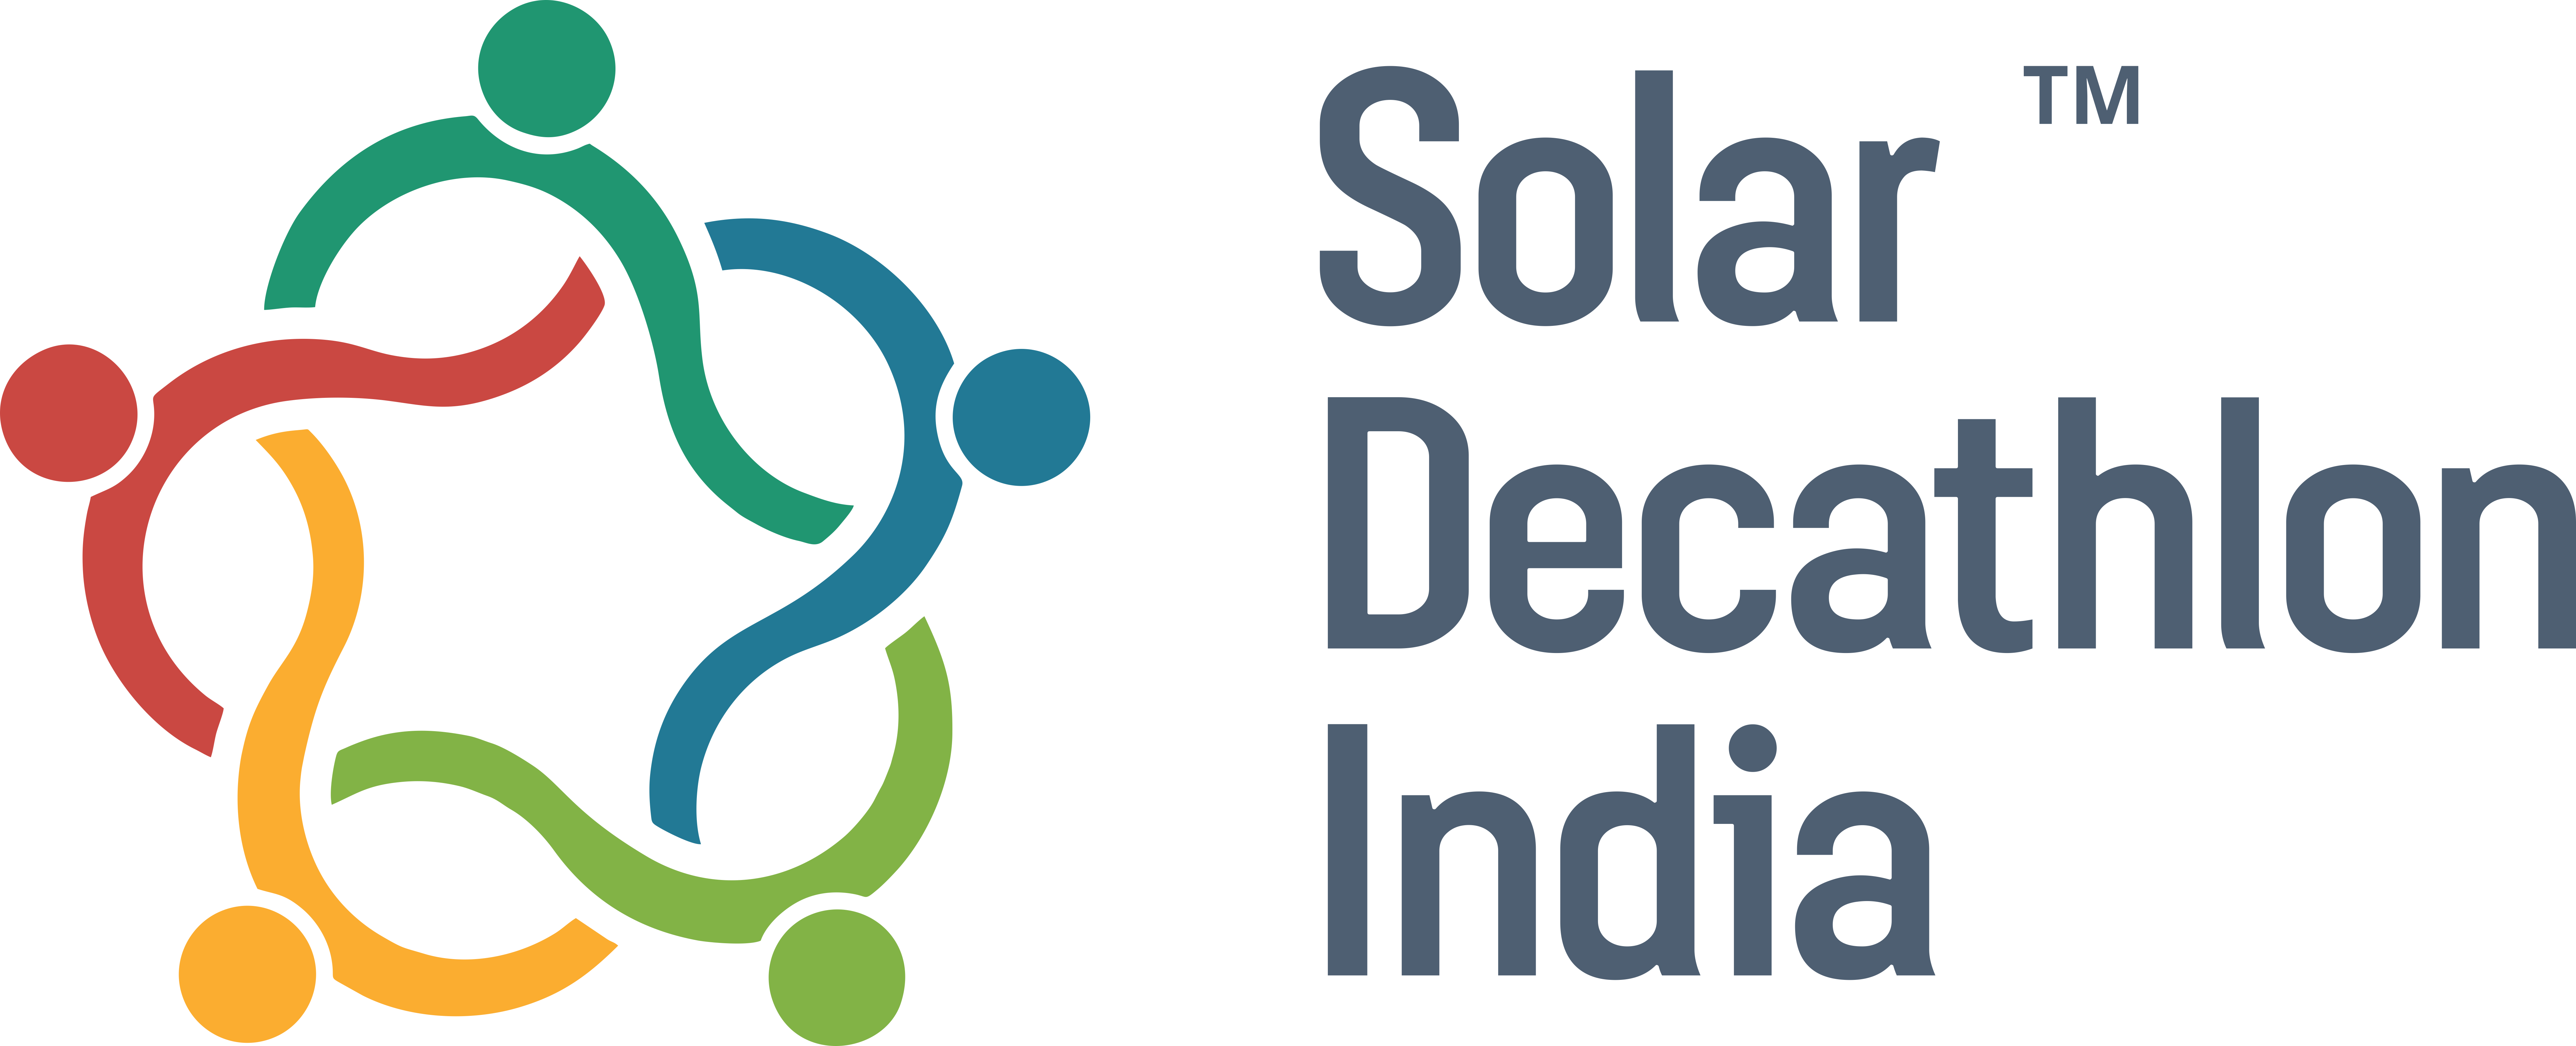 Solar Decathlon: About Solar Decathlon